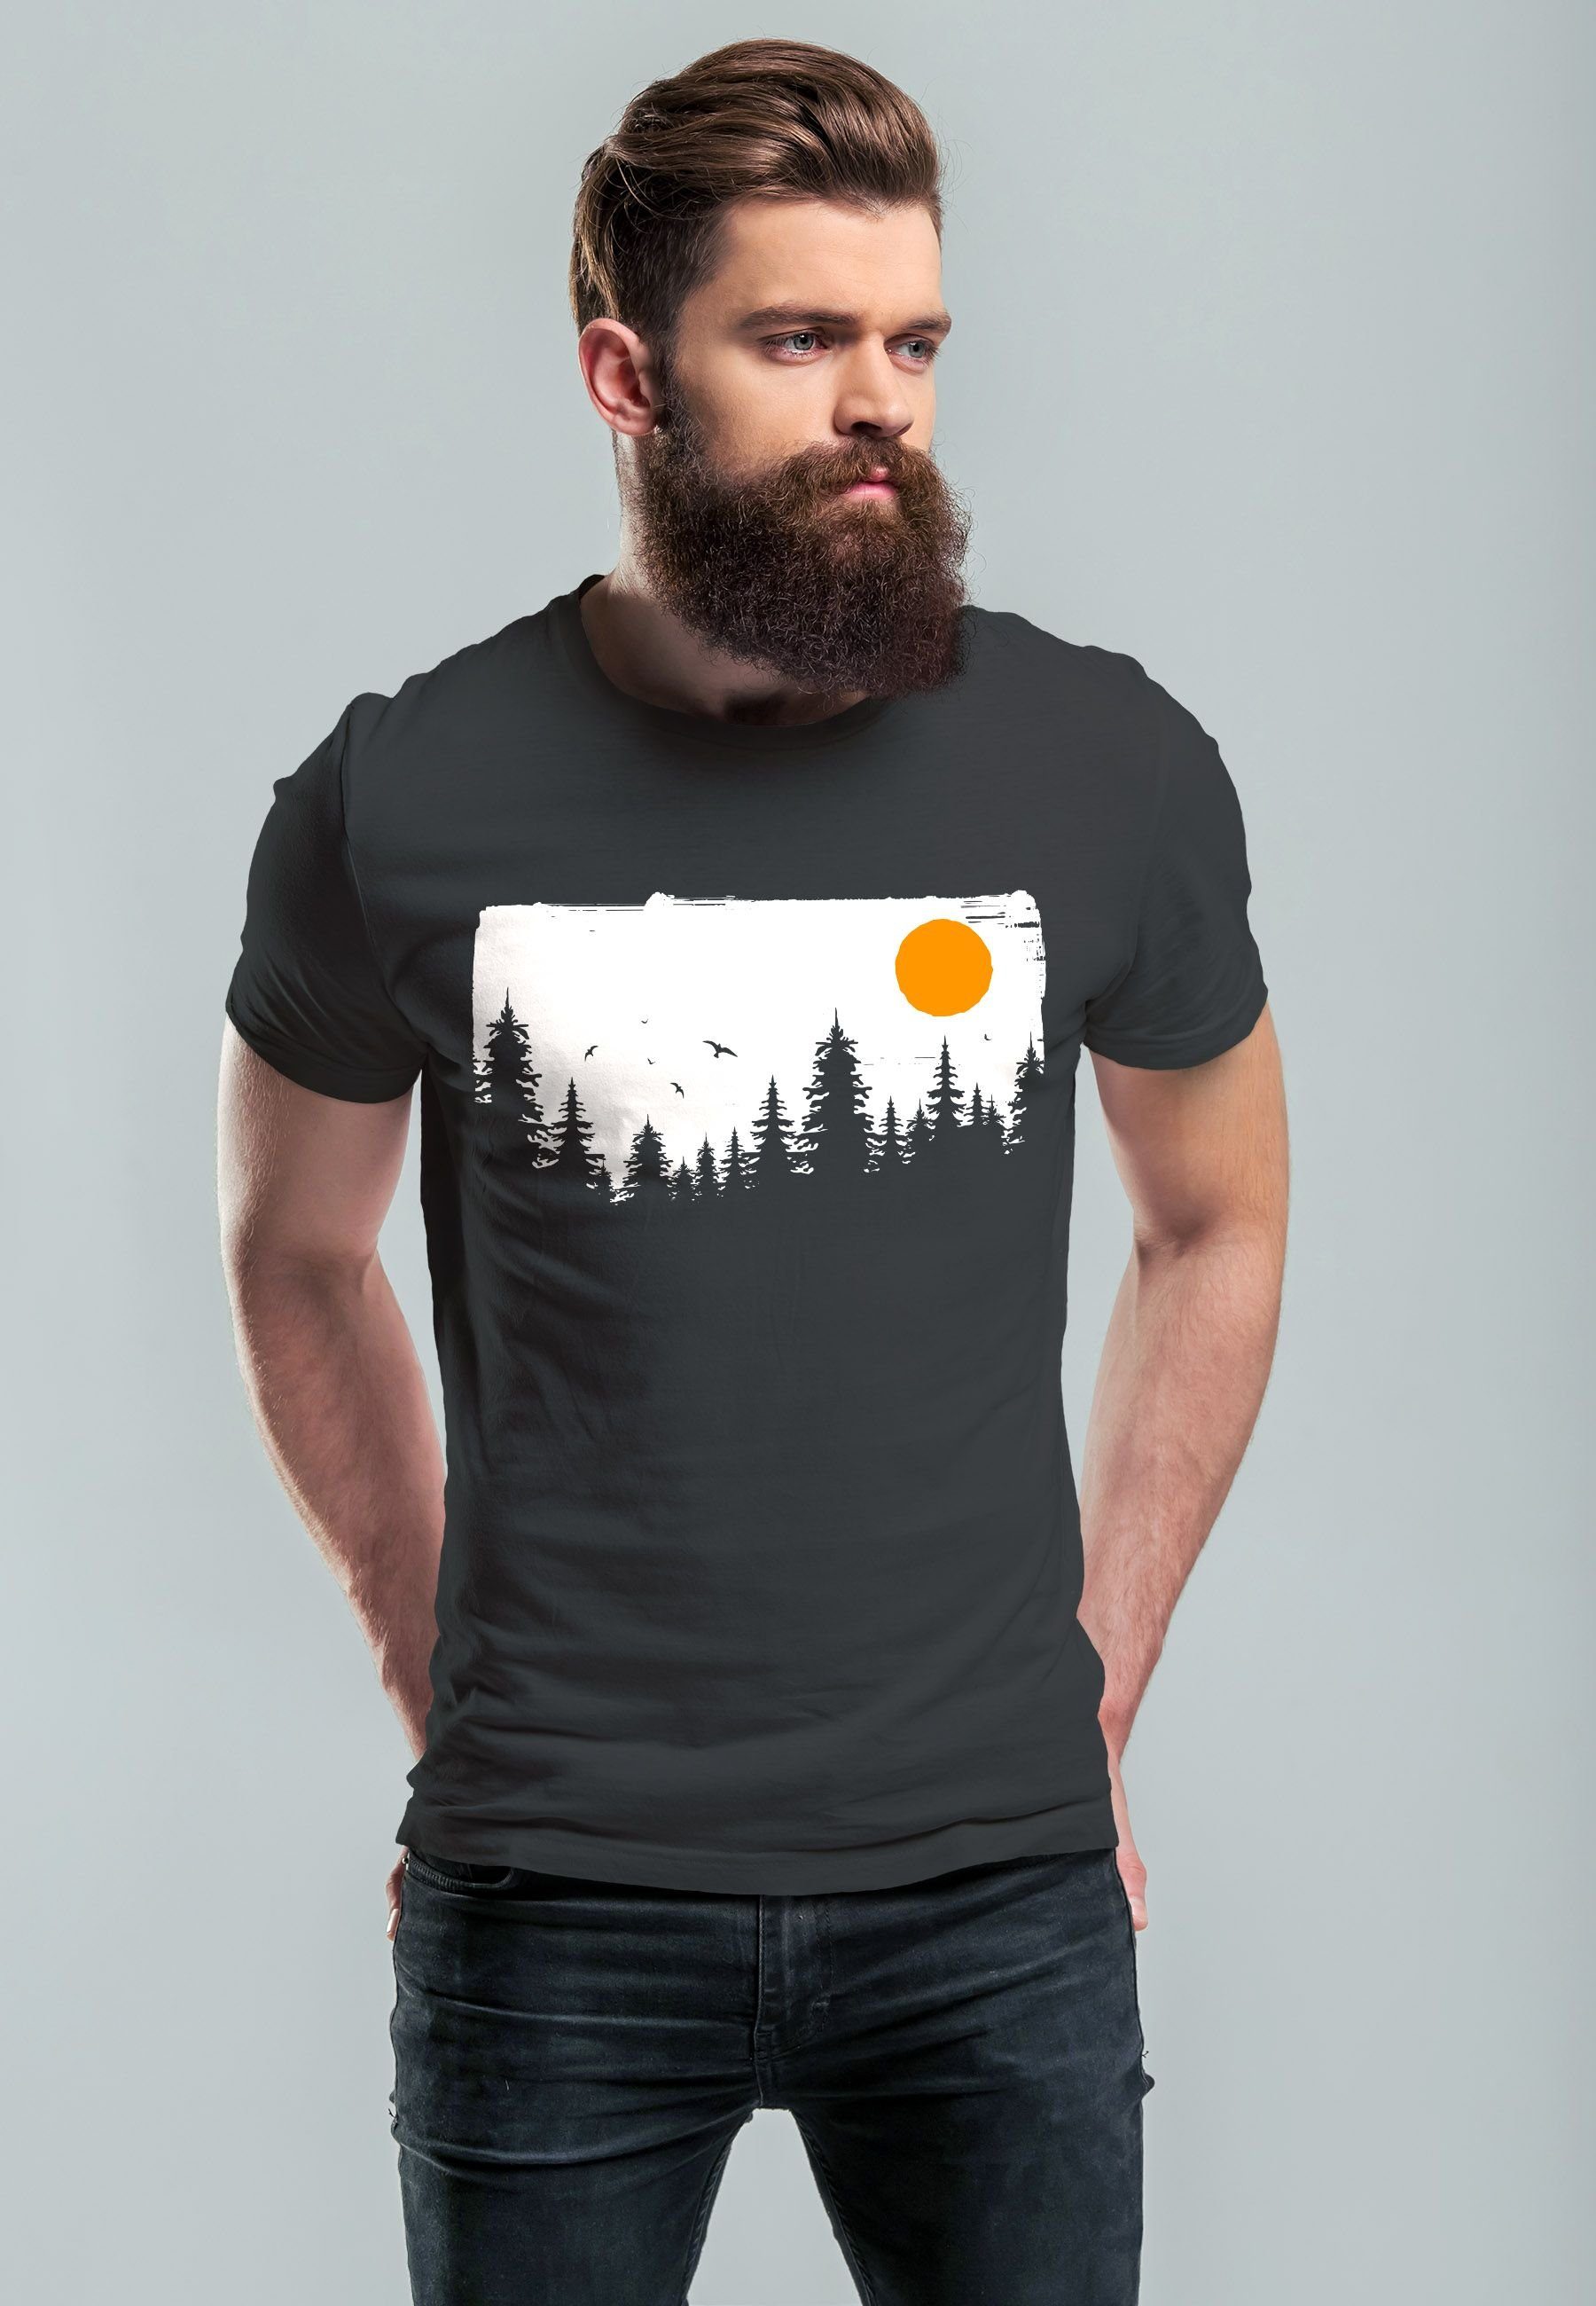 Herren Wald Adventure Abenteuer anthrazit T-Shirt Outdoor Natur-Liebhaber Print Neverless Print-Shirt Bäume mit